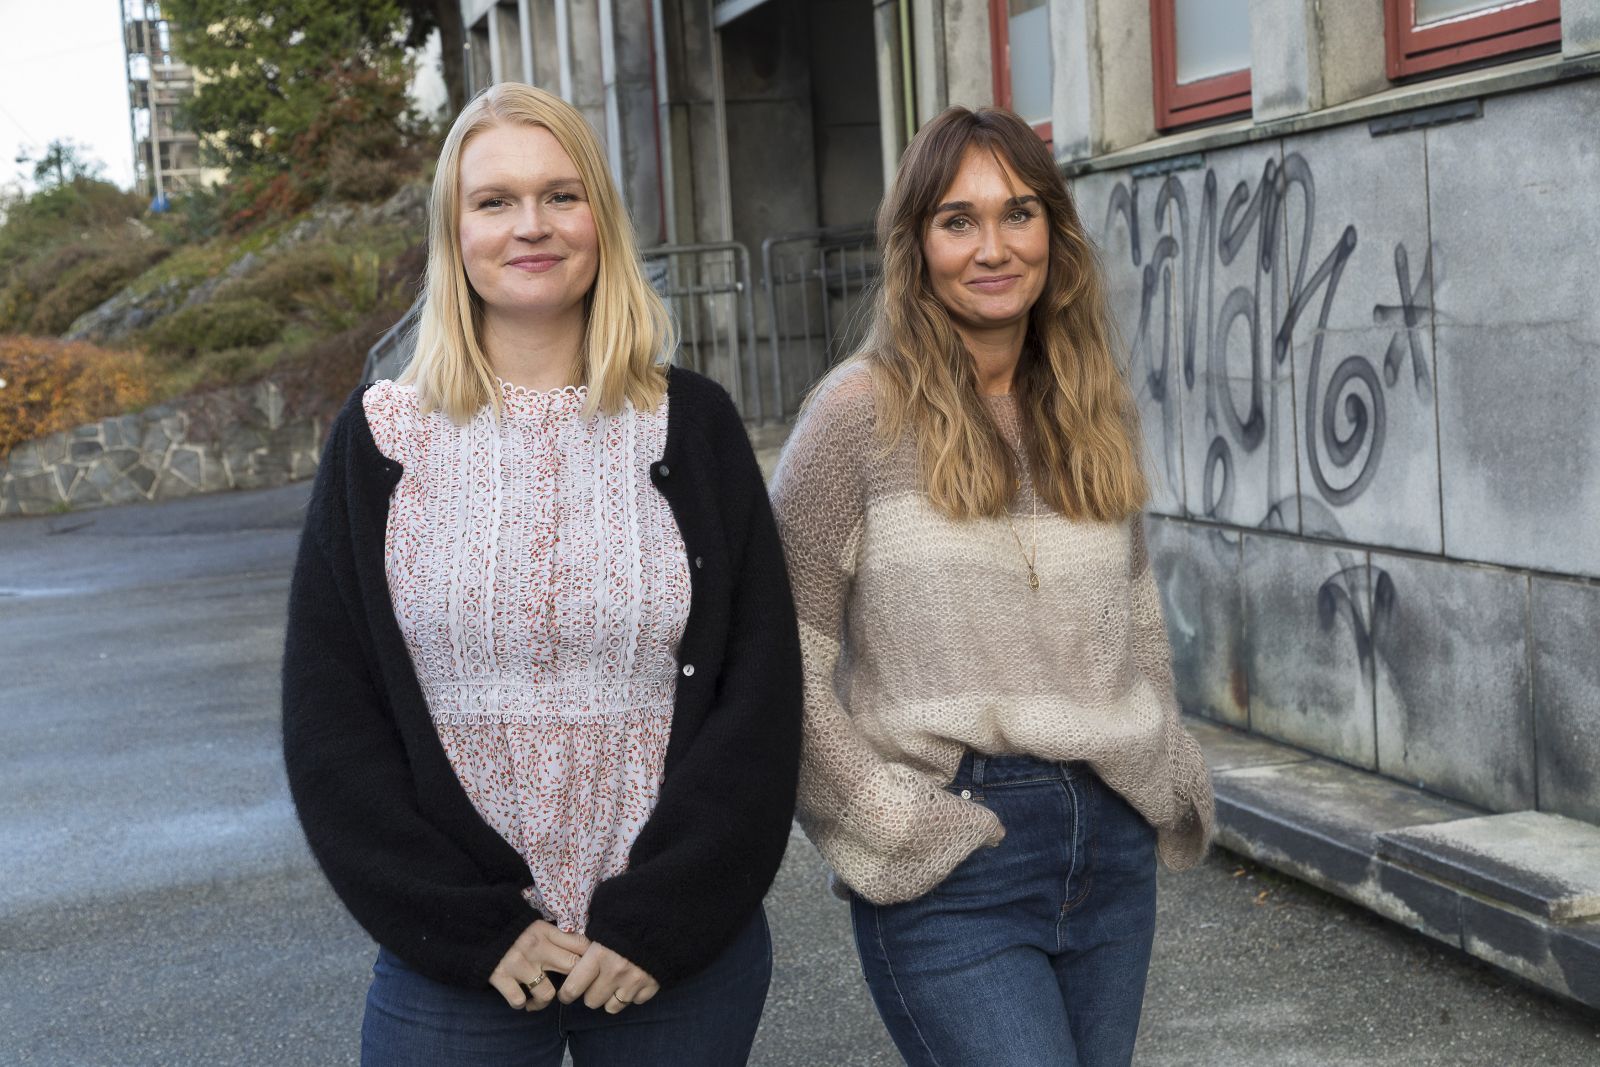 Bilde av to damer som er ansatte i Haugesund kommune. Copyright Otto von Munchow 